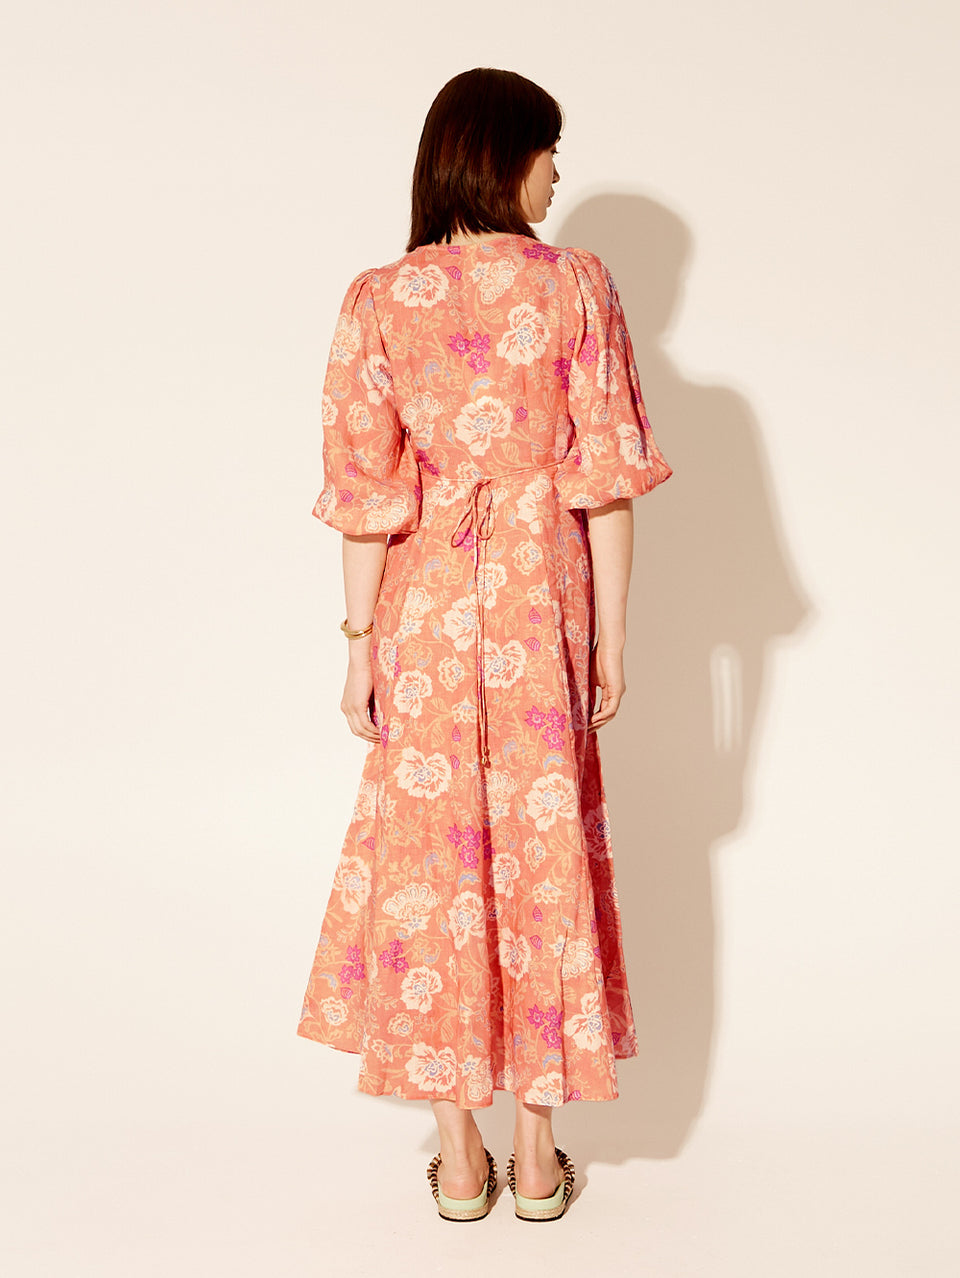 Rosa Maxi Dress KIVARI | Model wears pink floral dress back view